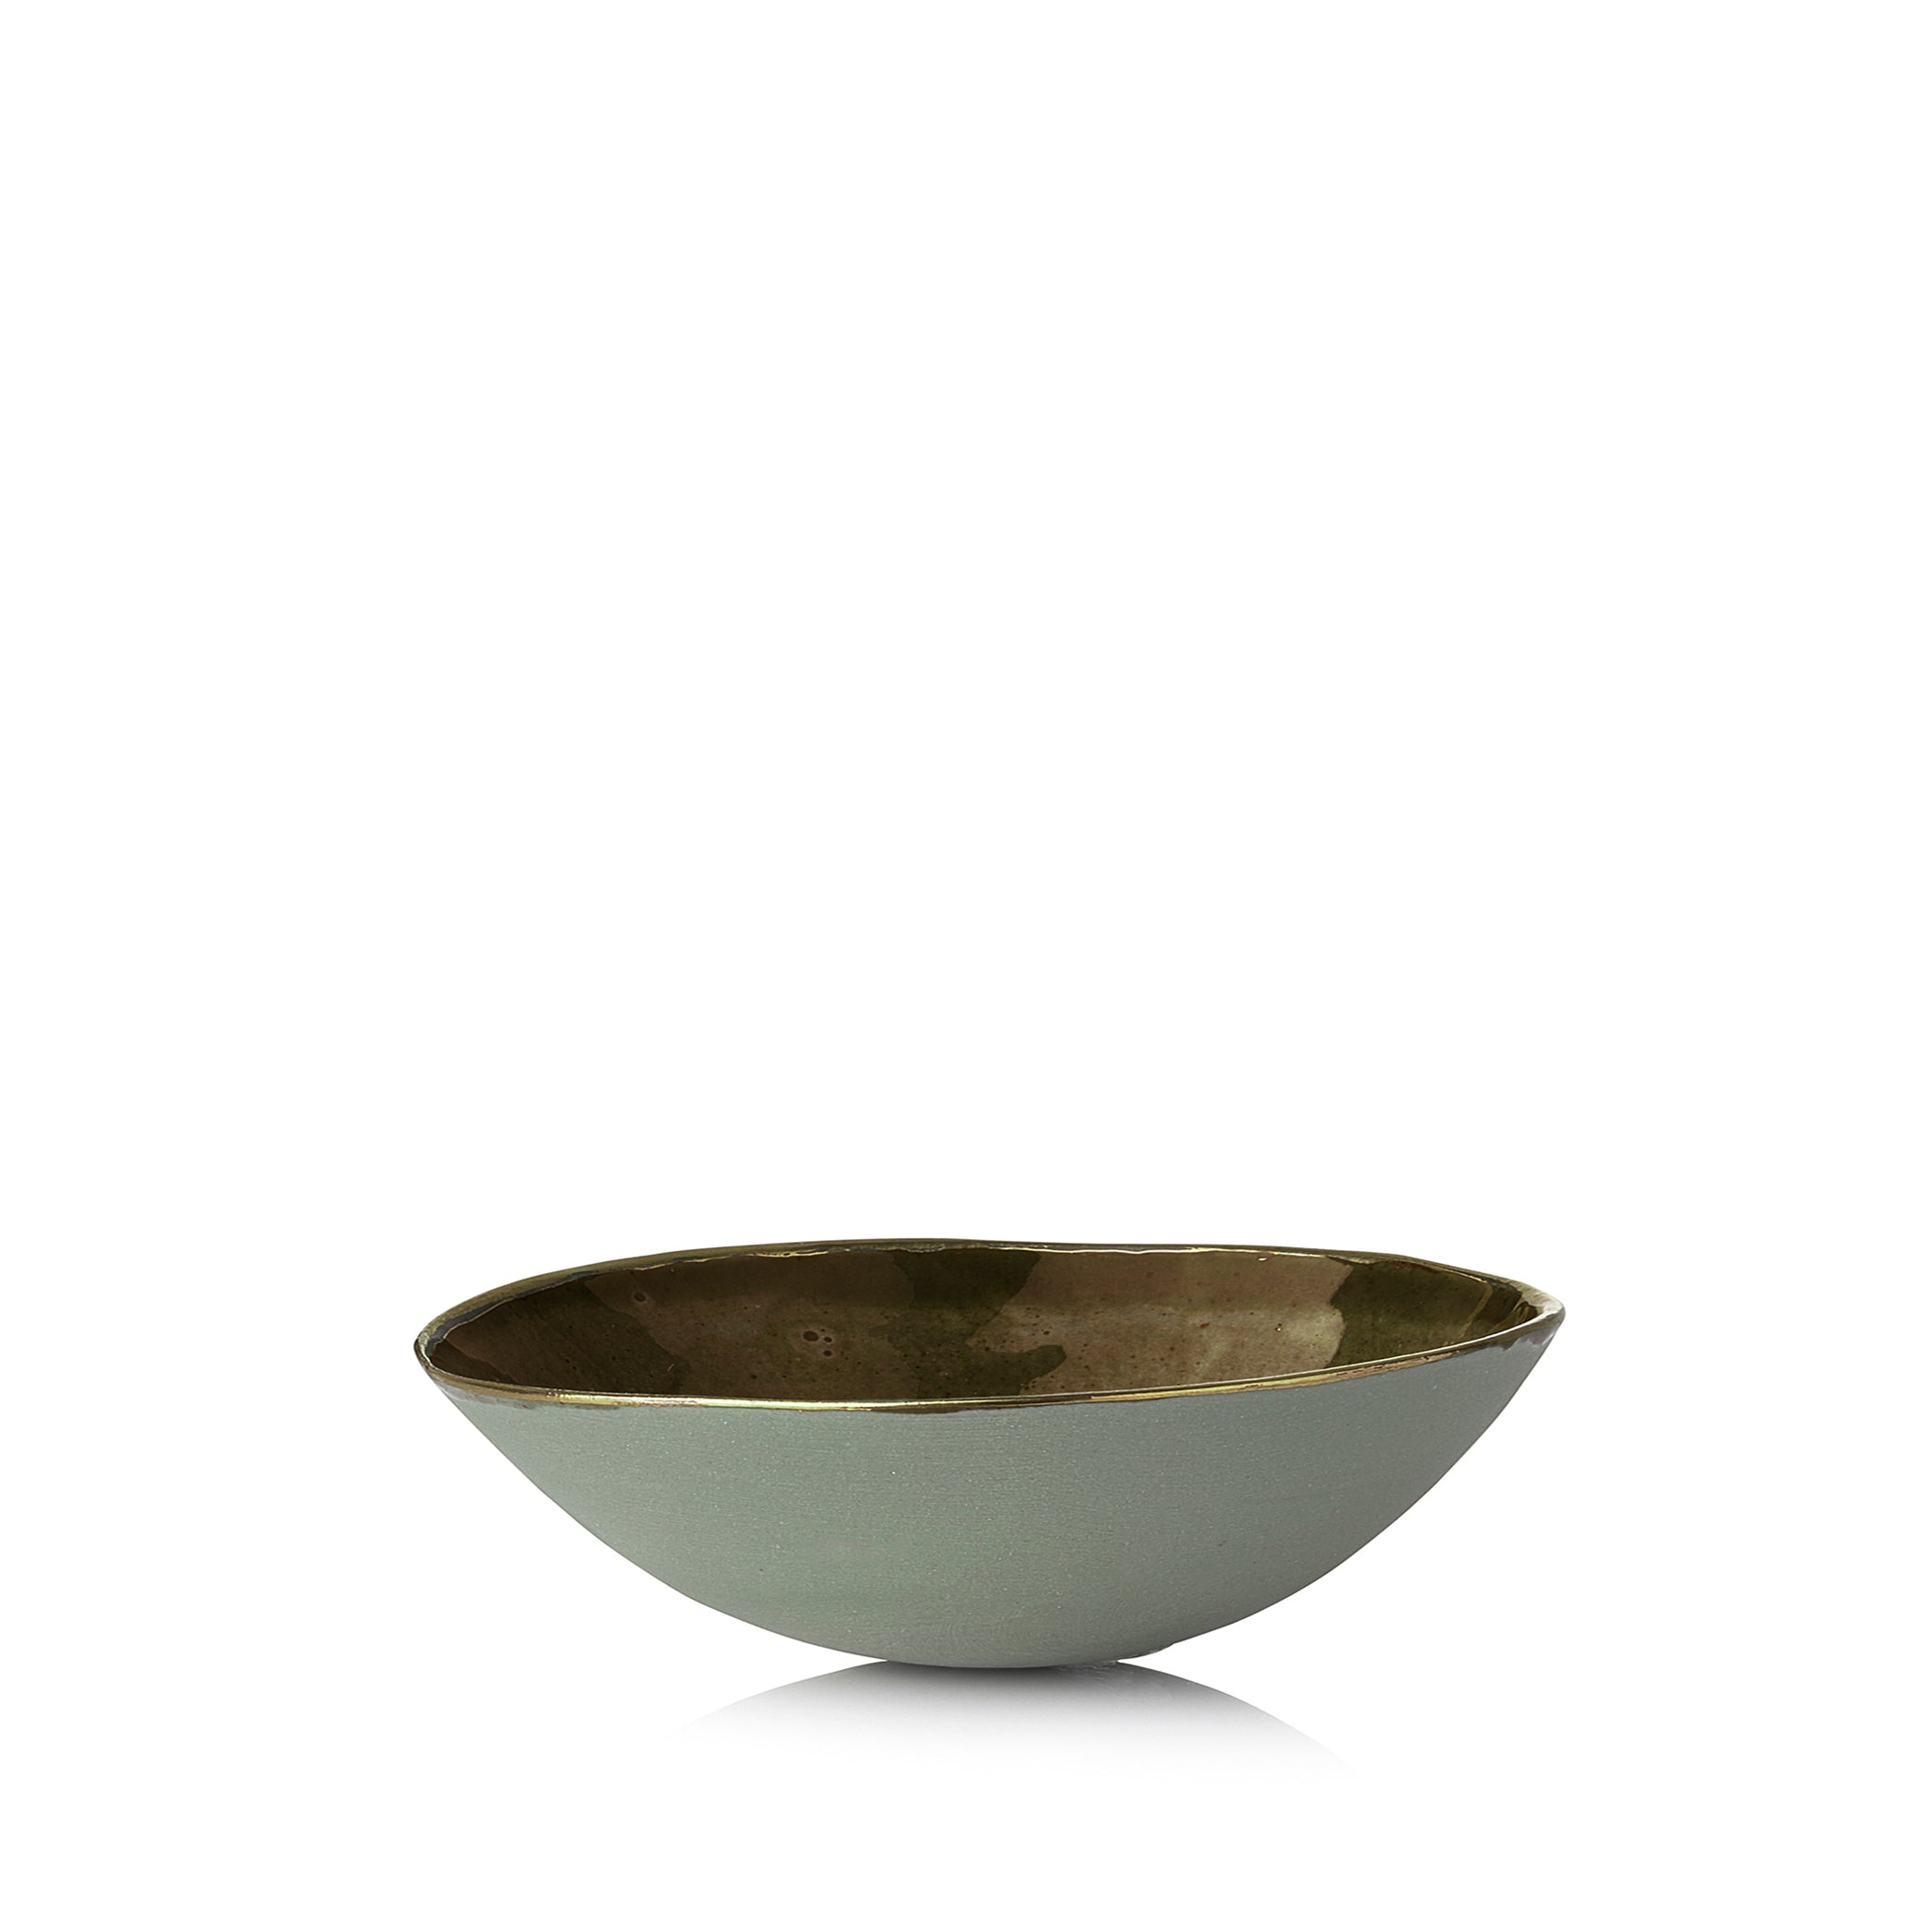 Olive Green Ceramic Bowl with Gold Rim, 16cm